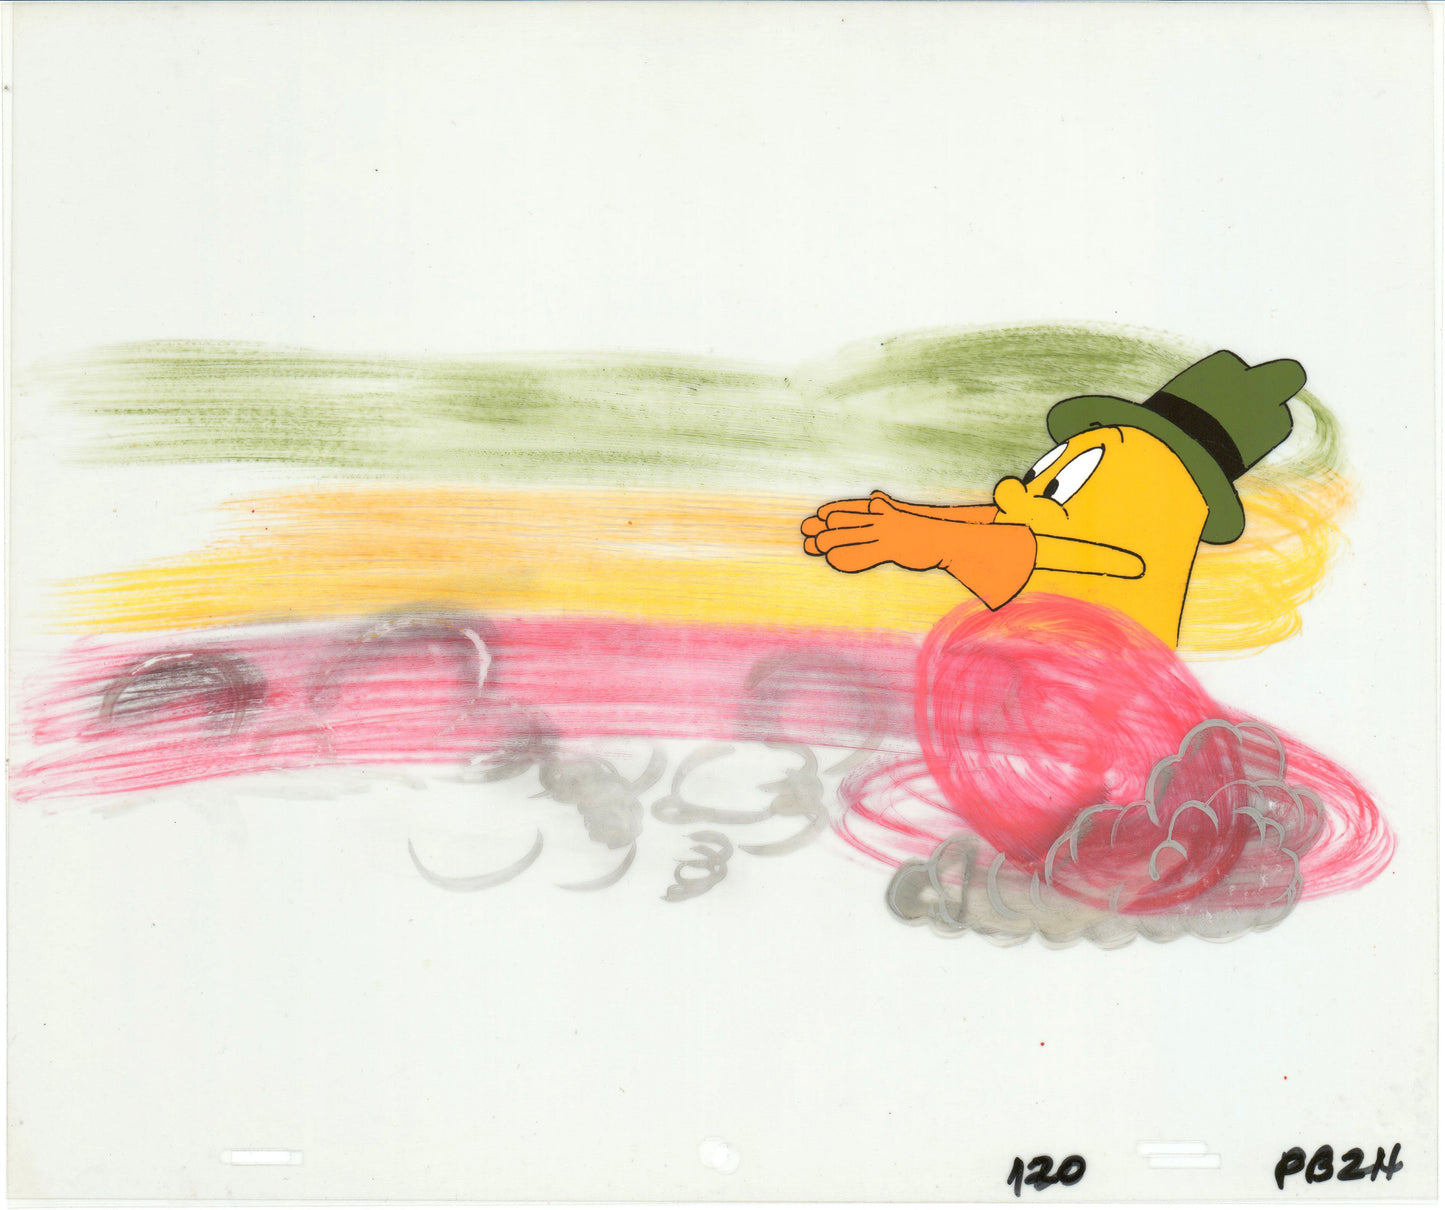 PacMan Production Animation Art Cel from Hanna Barbera 1982-83 b07366